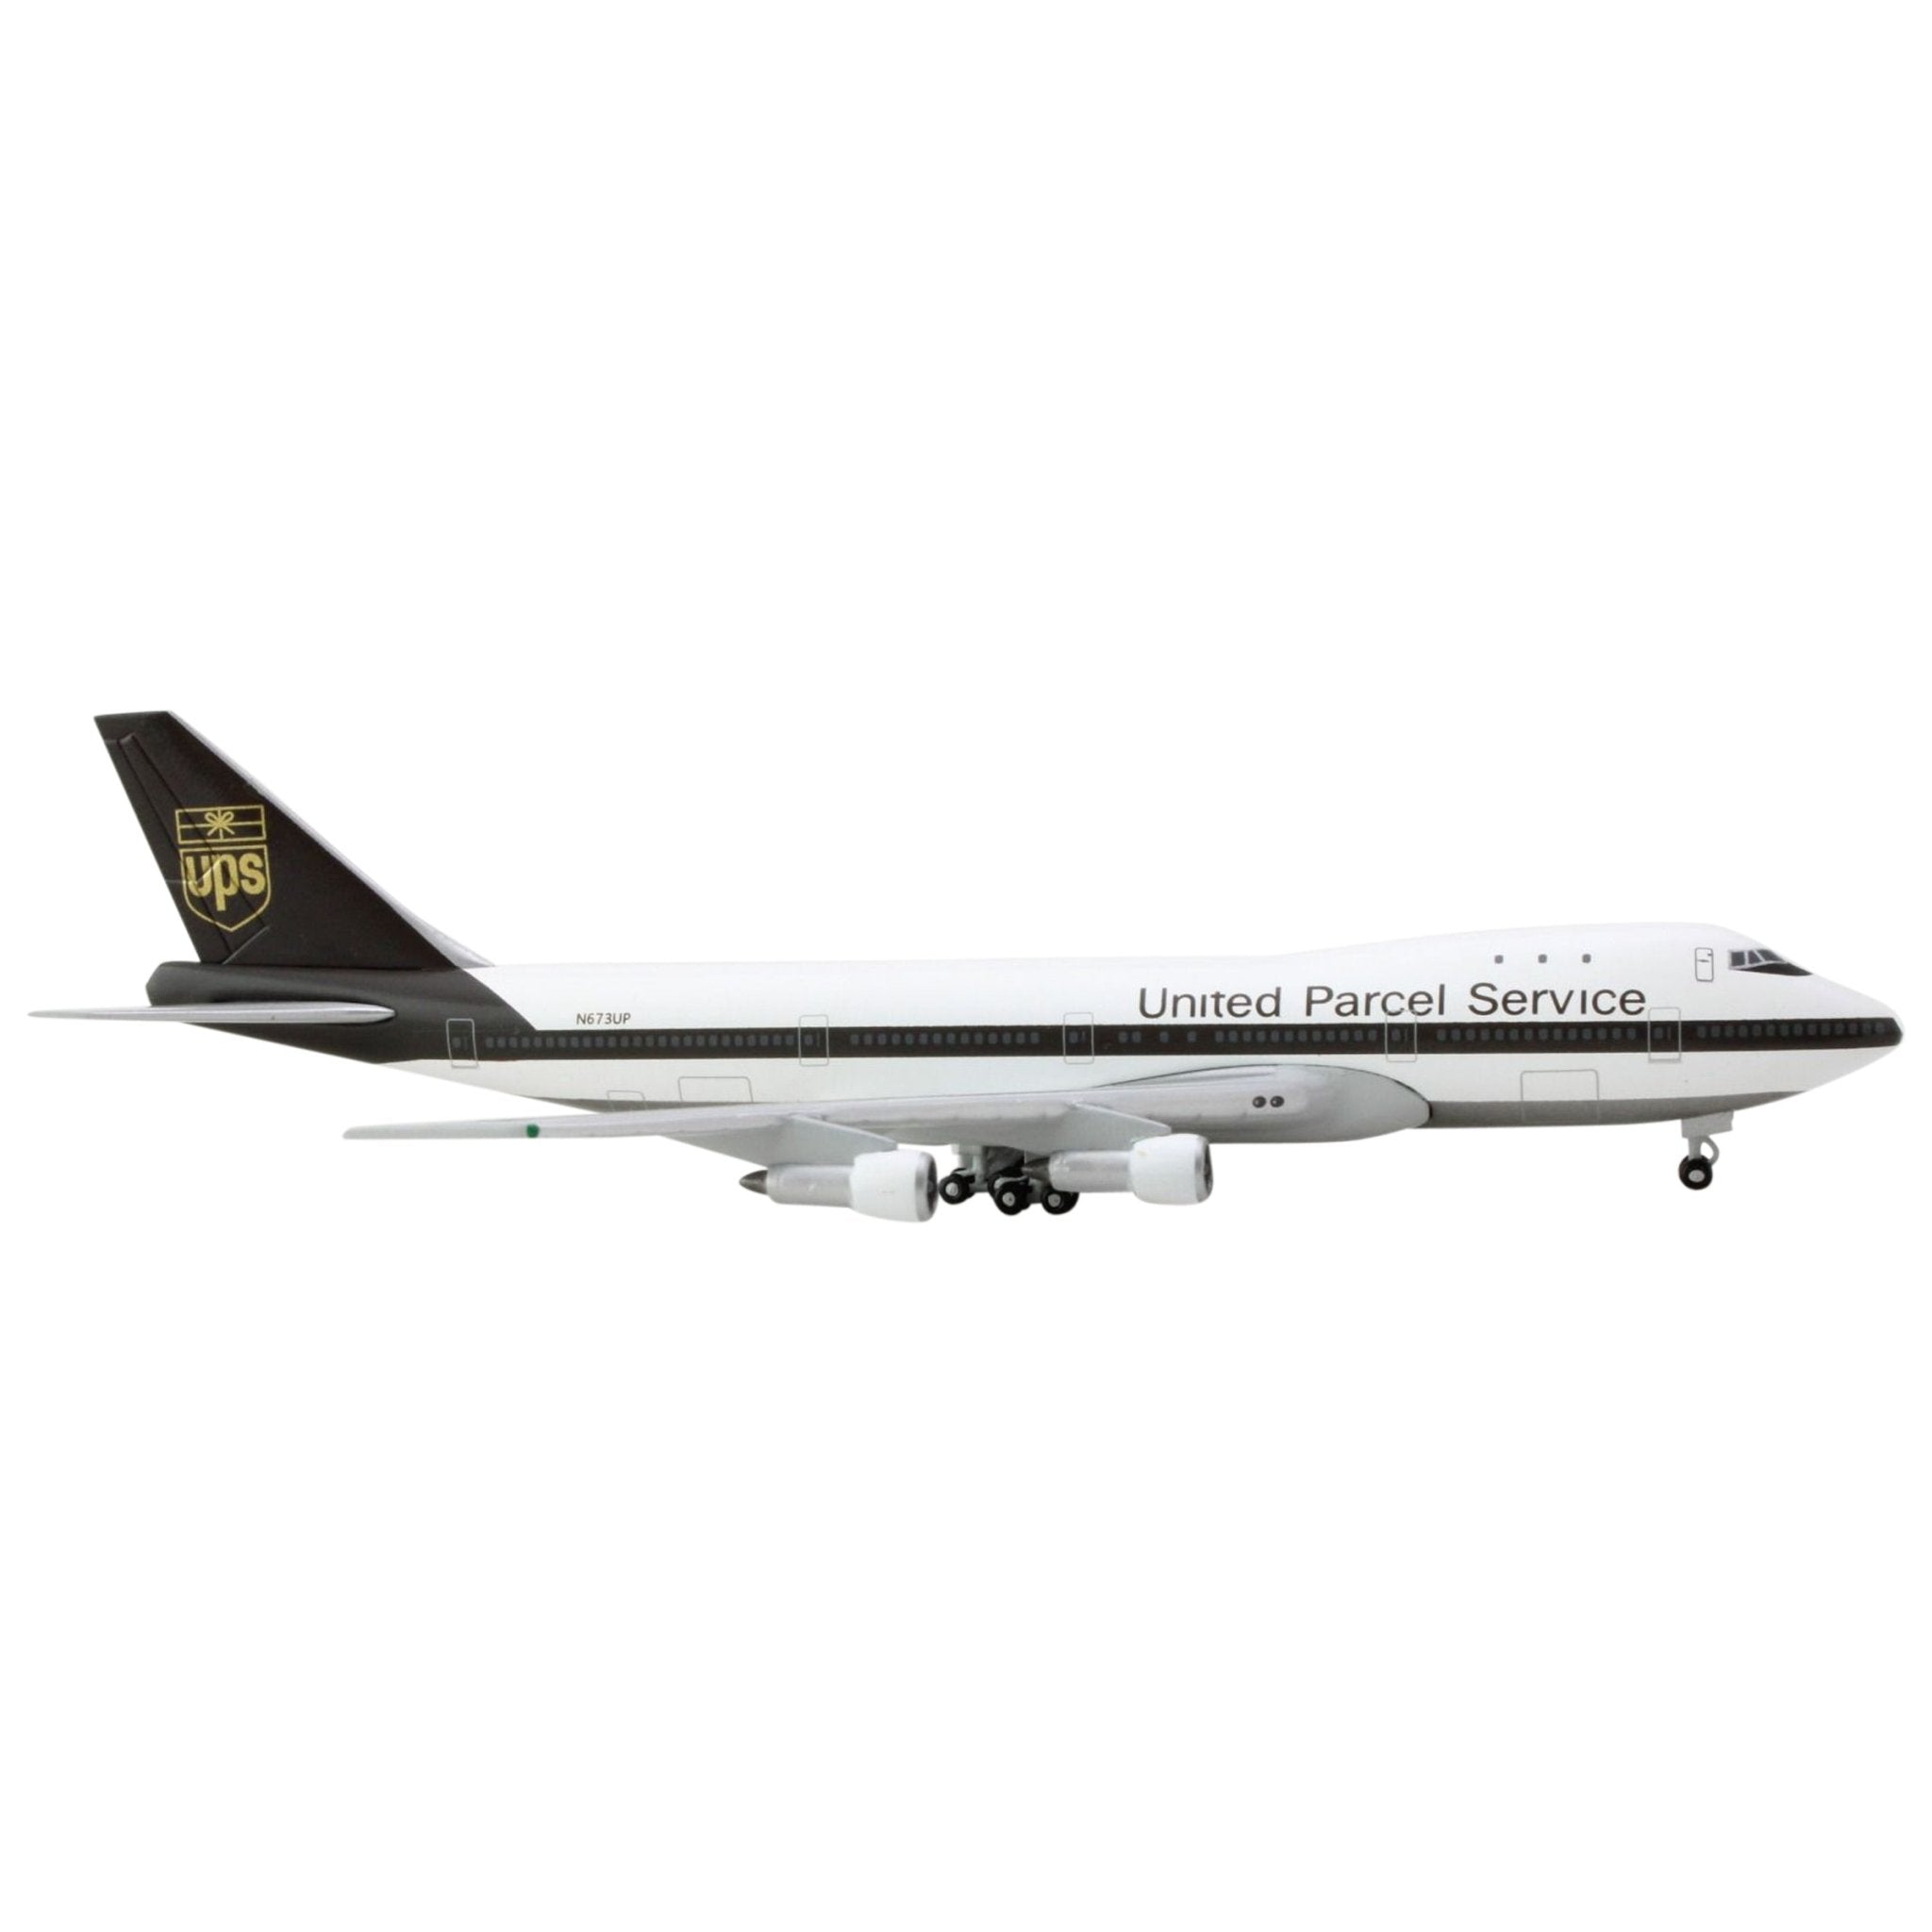 Herpa UPS 747-100F 1/500 Die-Cast Metal Model Aircraft - PilotMall.com